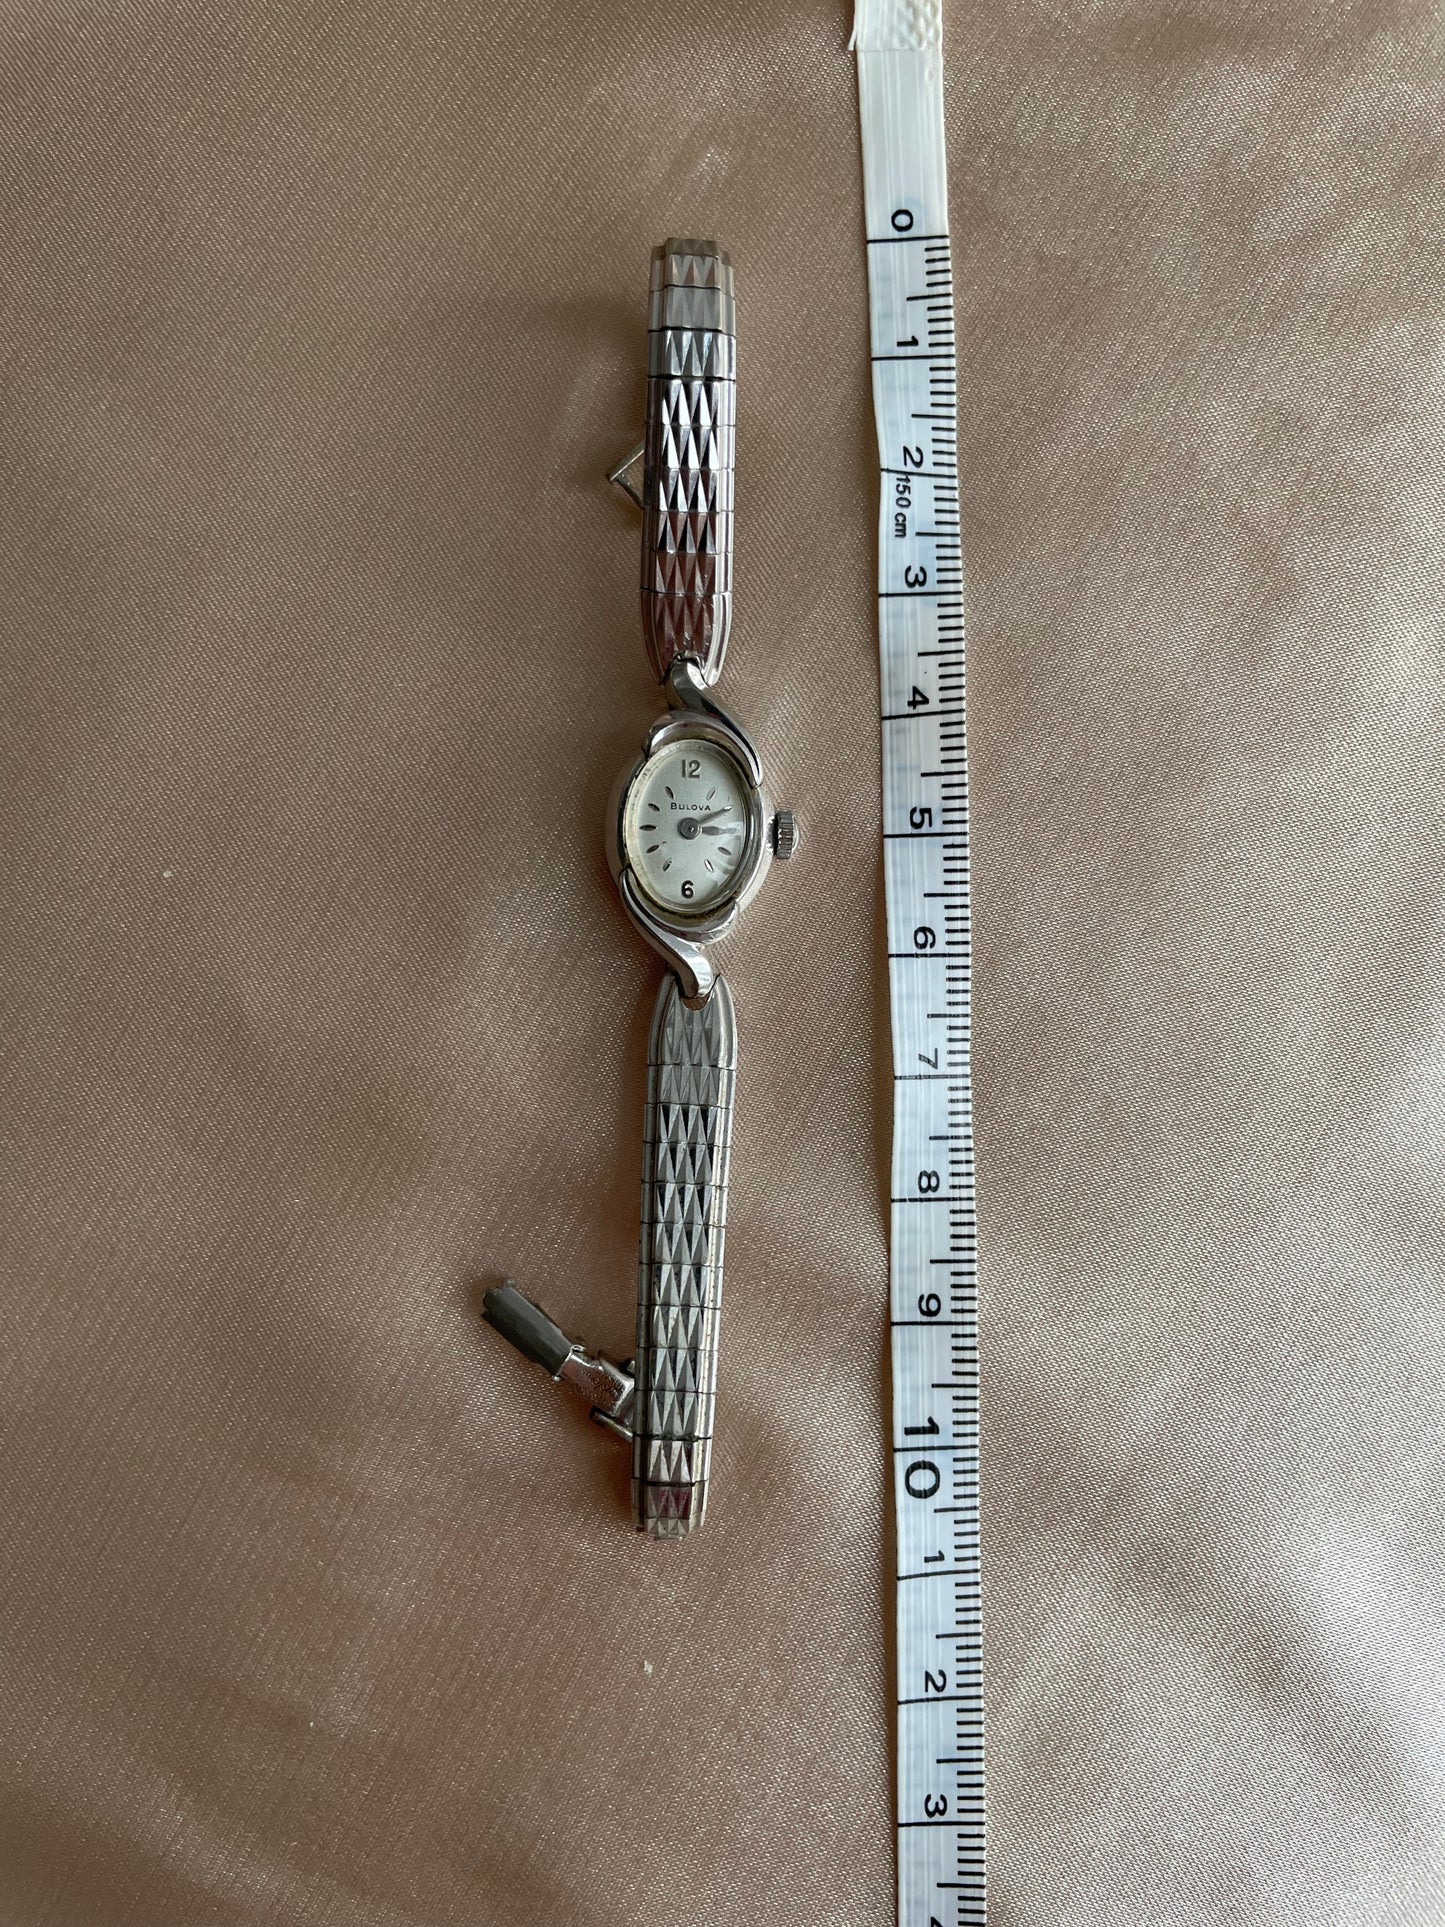 Vintage silver watch